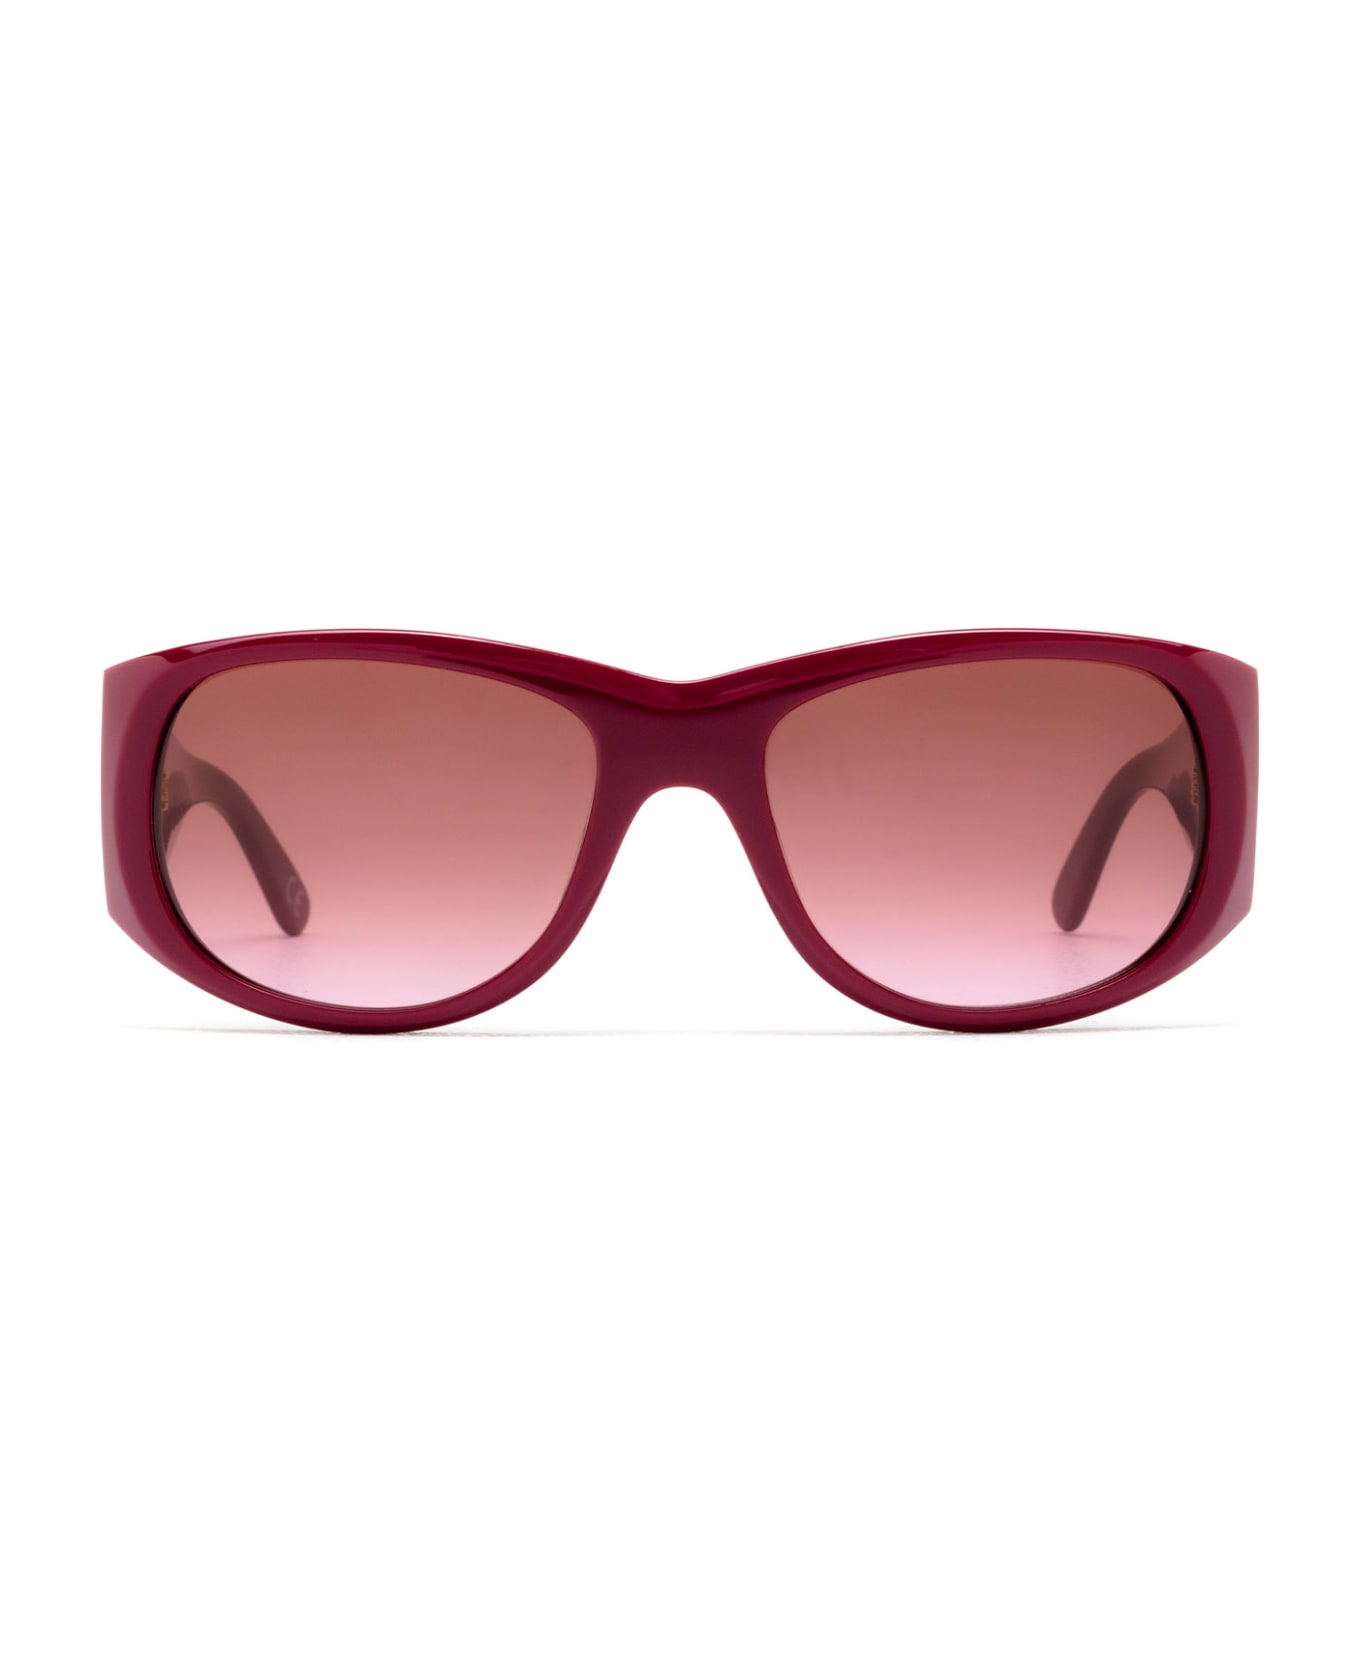 Marni Eyewear Orinoco River Bordeaux Sunglasses - Bordeaux サングラス